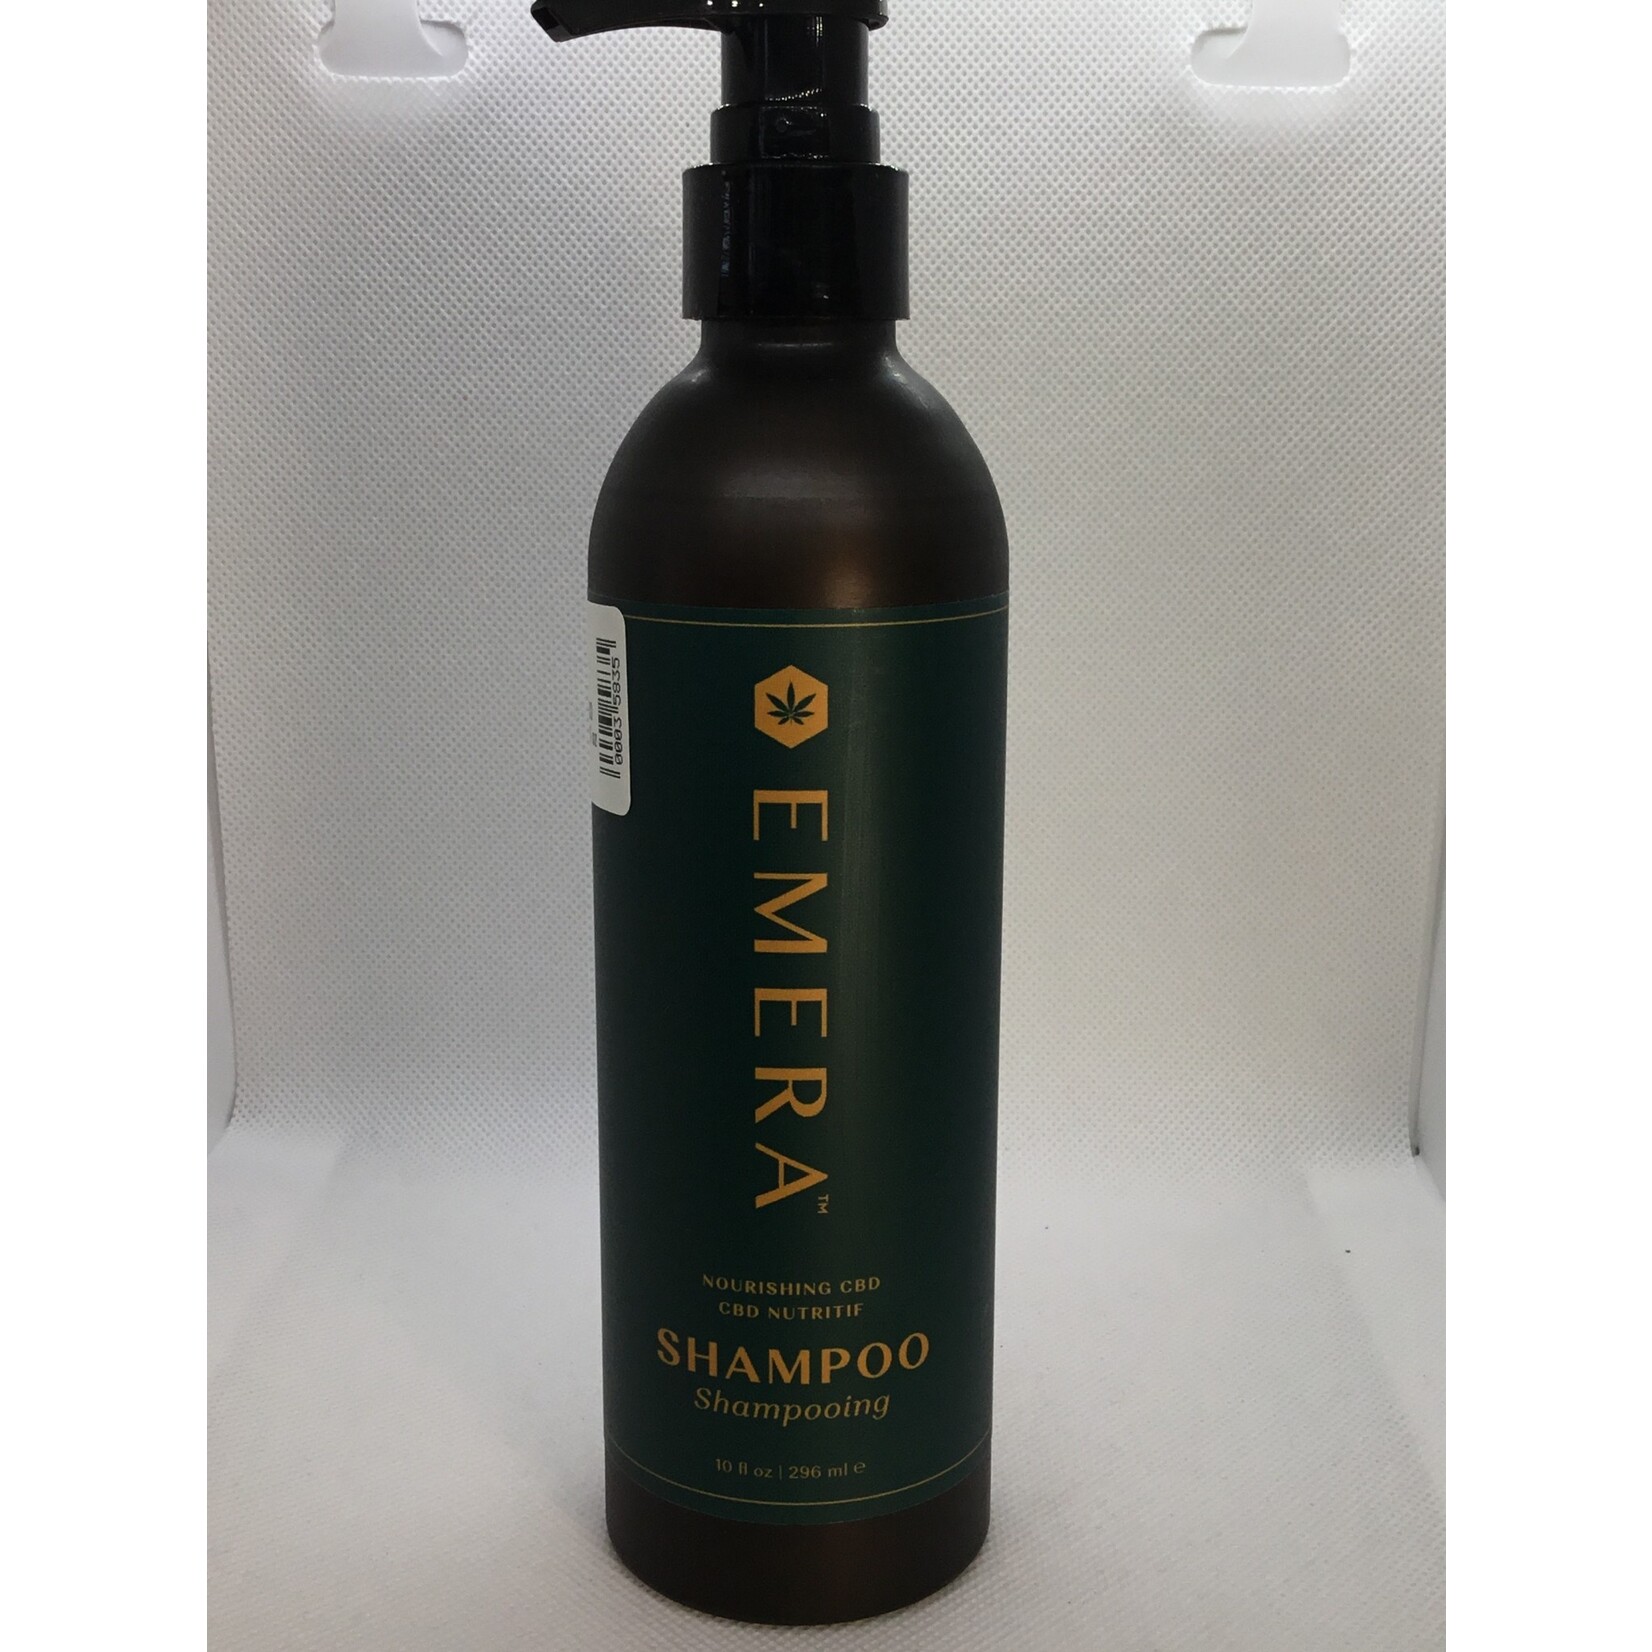 Earthly Body Emera Nourishing CBD Shampoo 10 fl oz / 296 ml